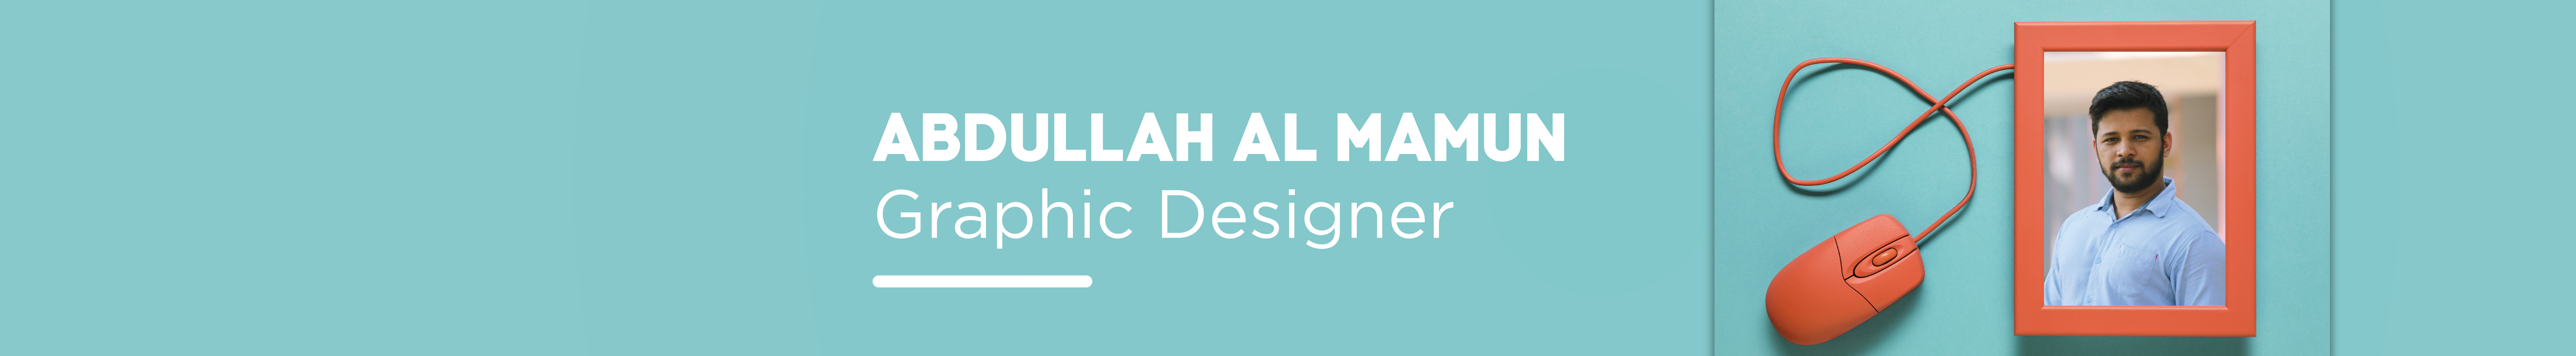 Banner de perfil de Abdullah Al Mamun